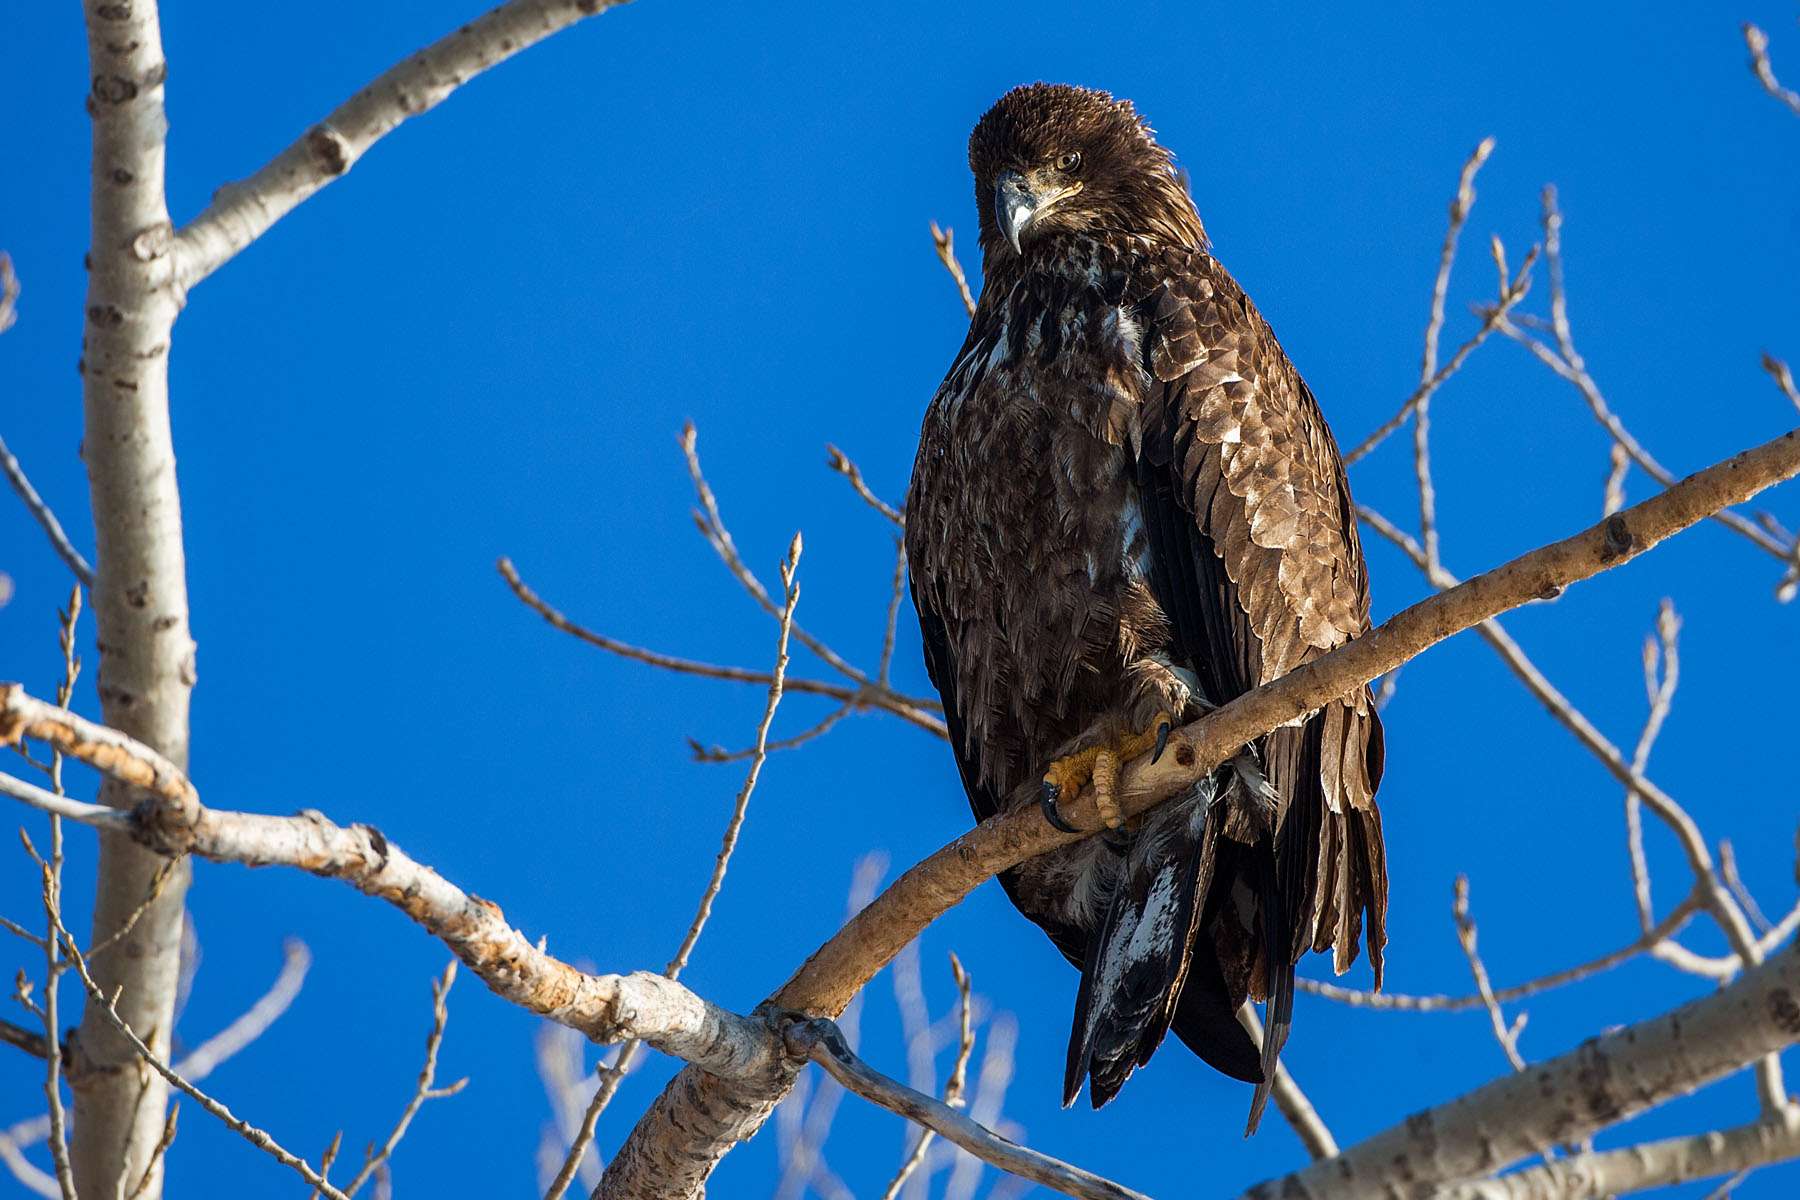 Juvenile bald eagle, Ft. Randall dam, South Dakota, February 2008.  Click for next photo.